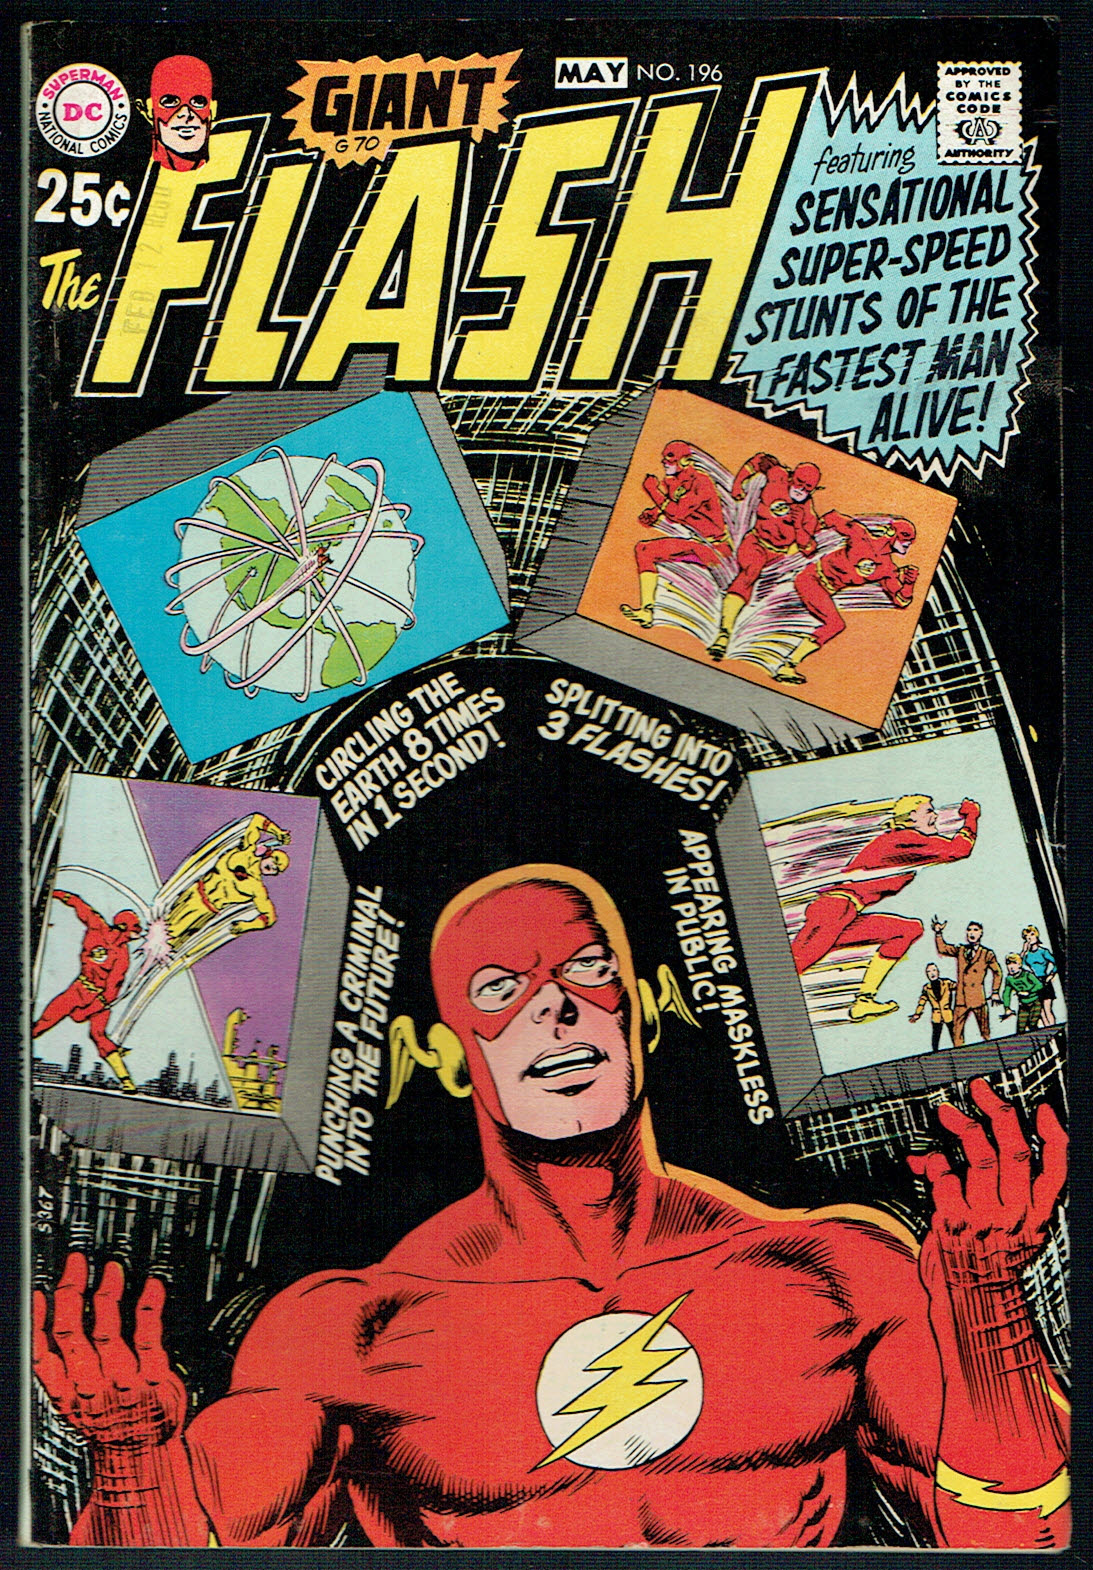 The Flash #196